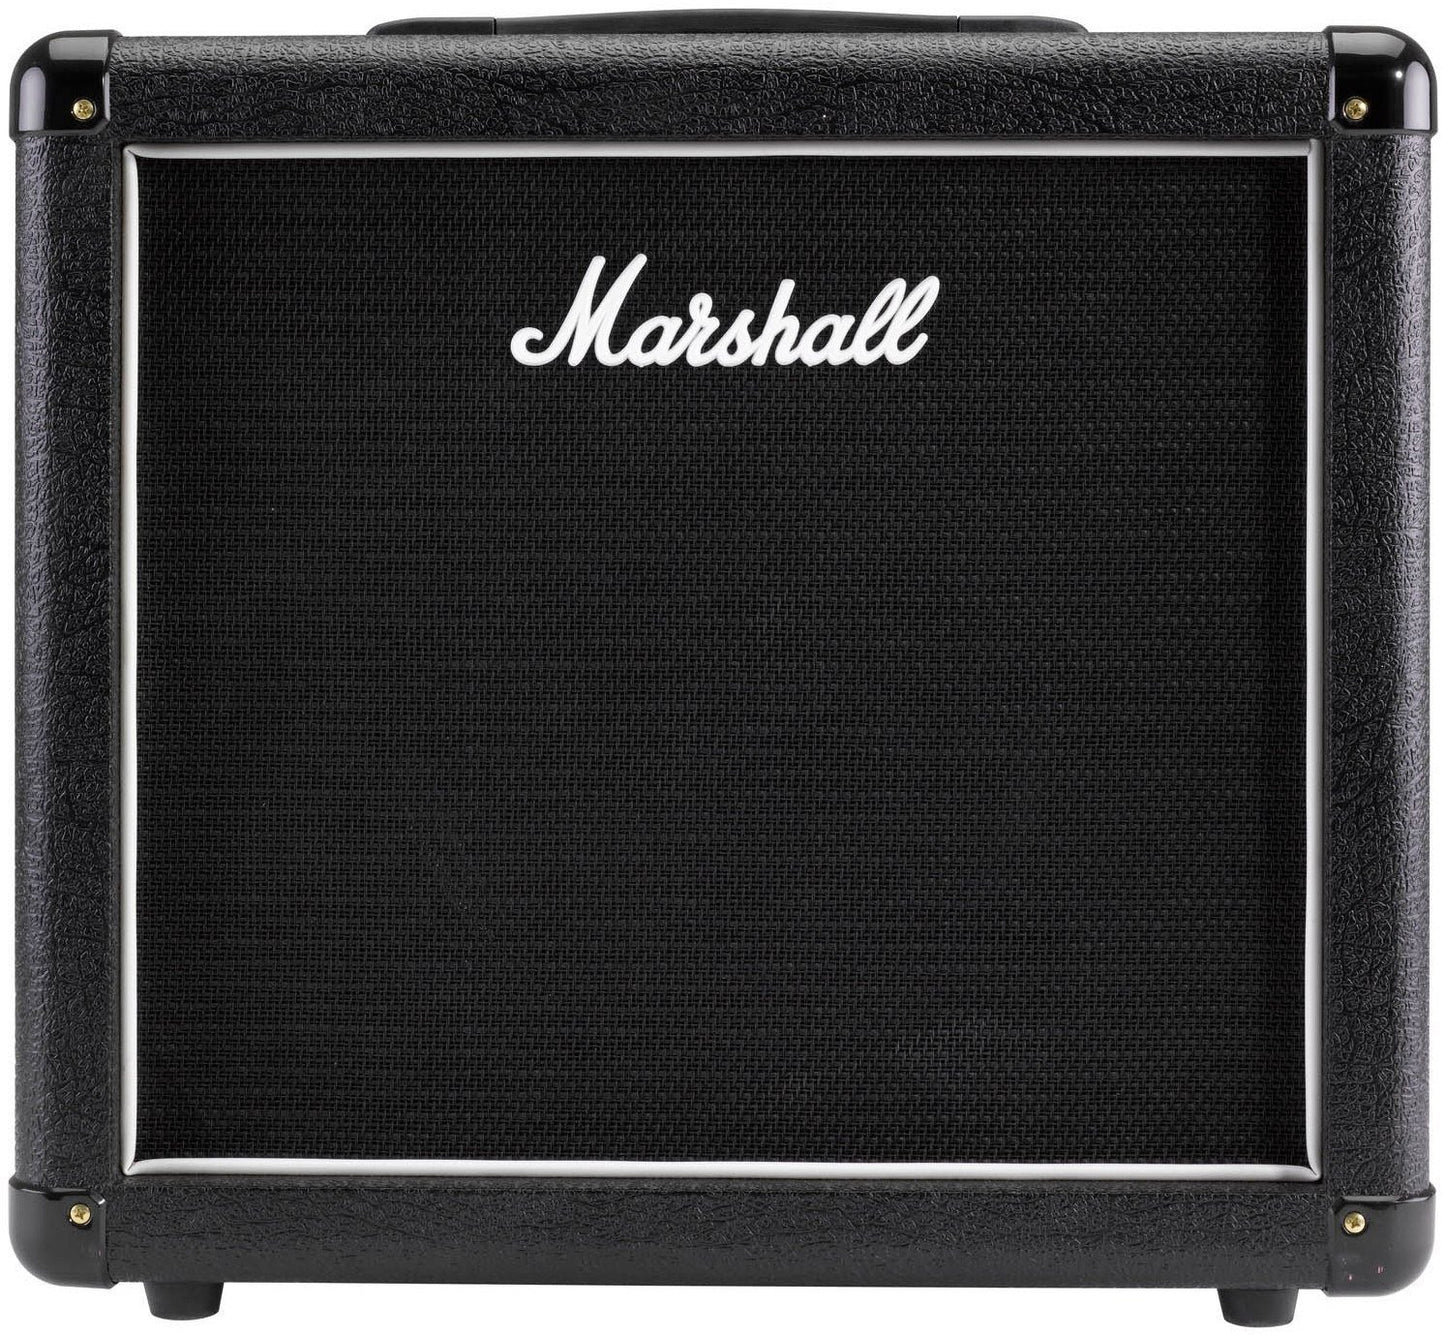 Marshall Marshall MX112 1x12 Closed-Back Cabinet